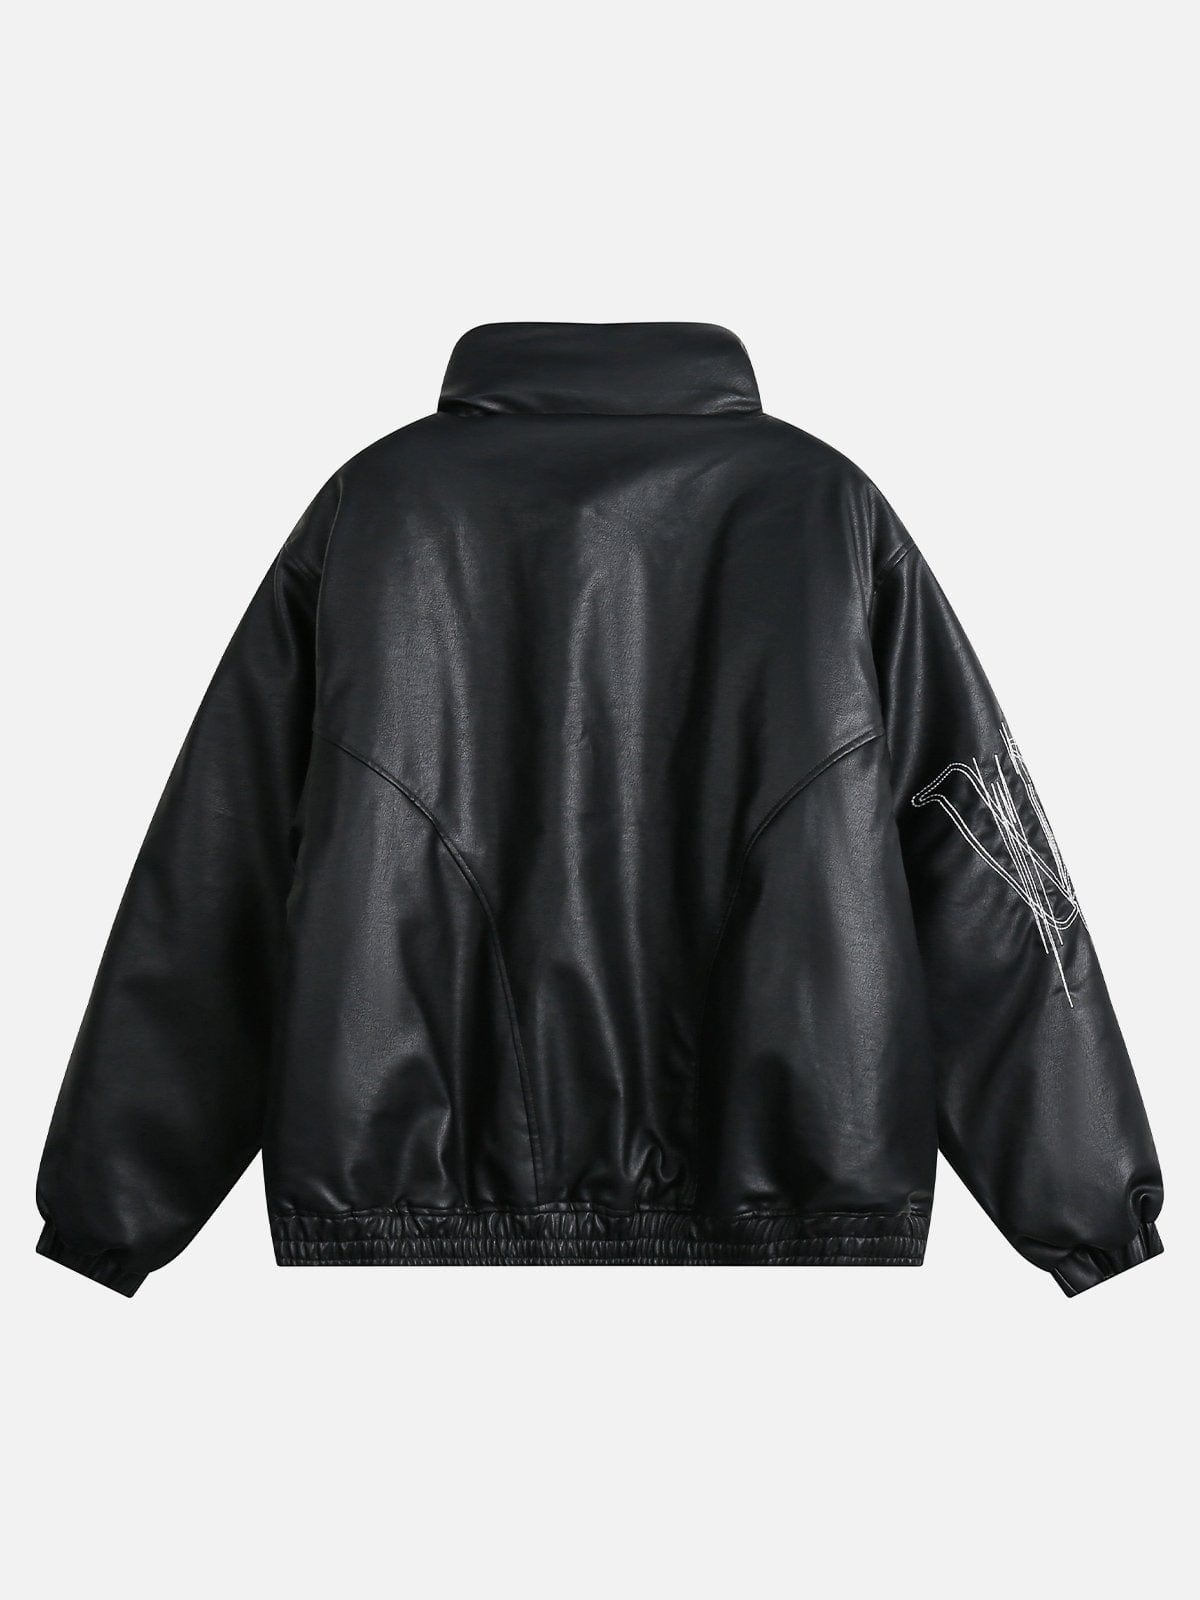 Multi Zip Up Leather Winter Coat